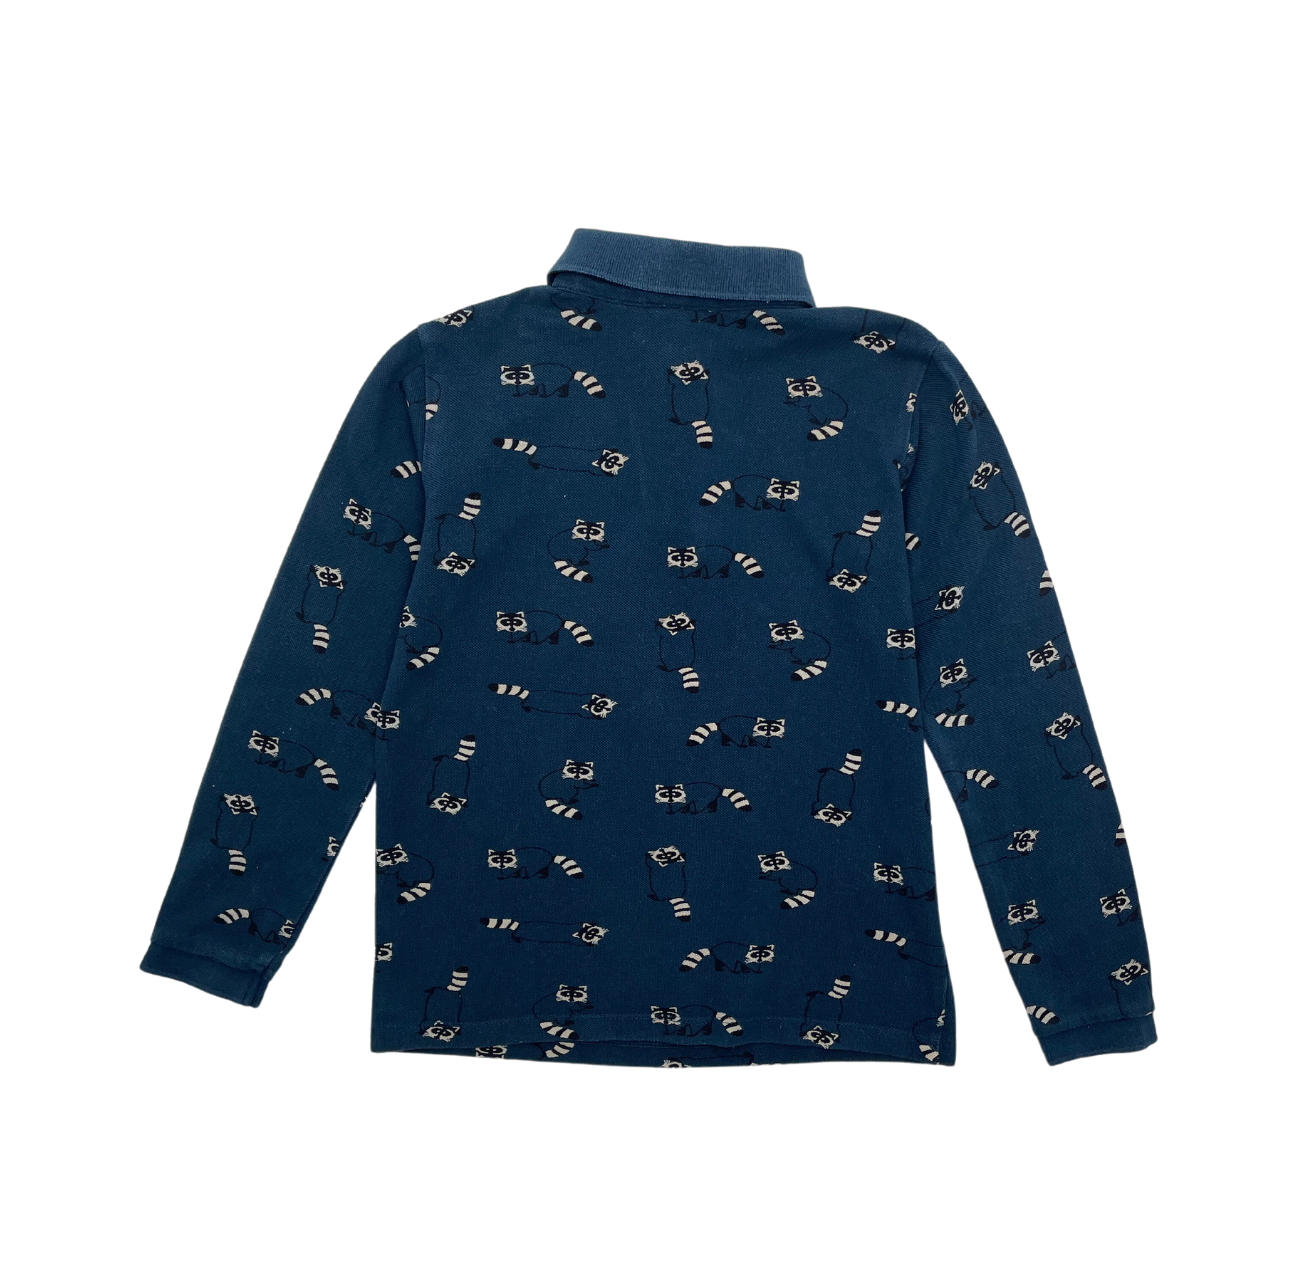 JACADI - Blue polo shirt with animal motifs - 8 years old